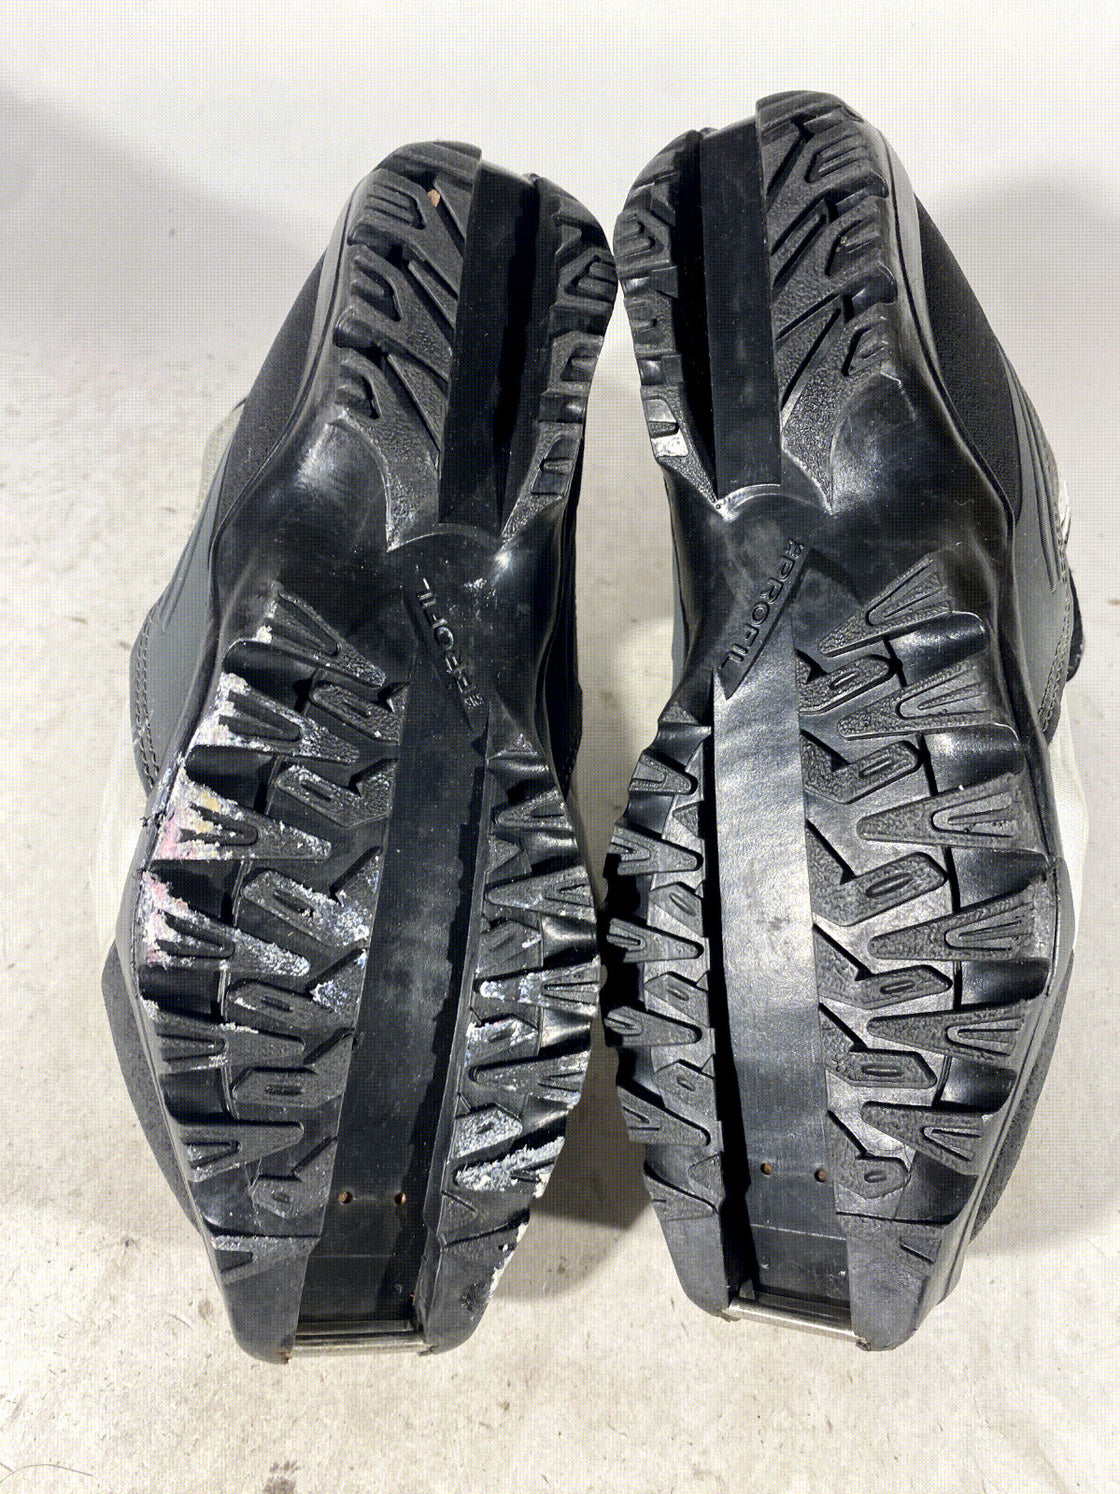 FISCHER XC Comfort Nordic Cross Country Ski Boots Size EU39 US7 SNS Profil